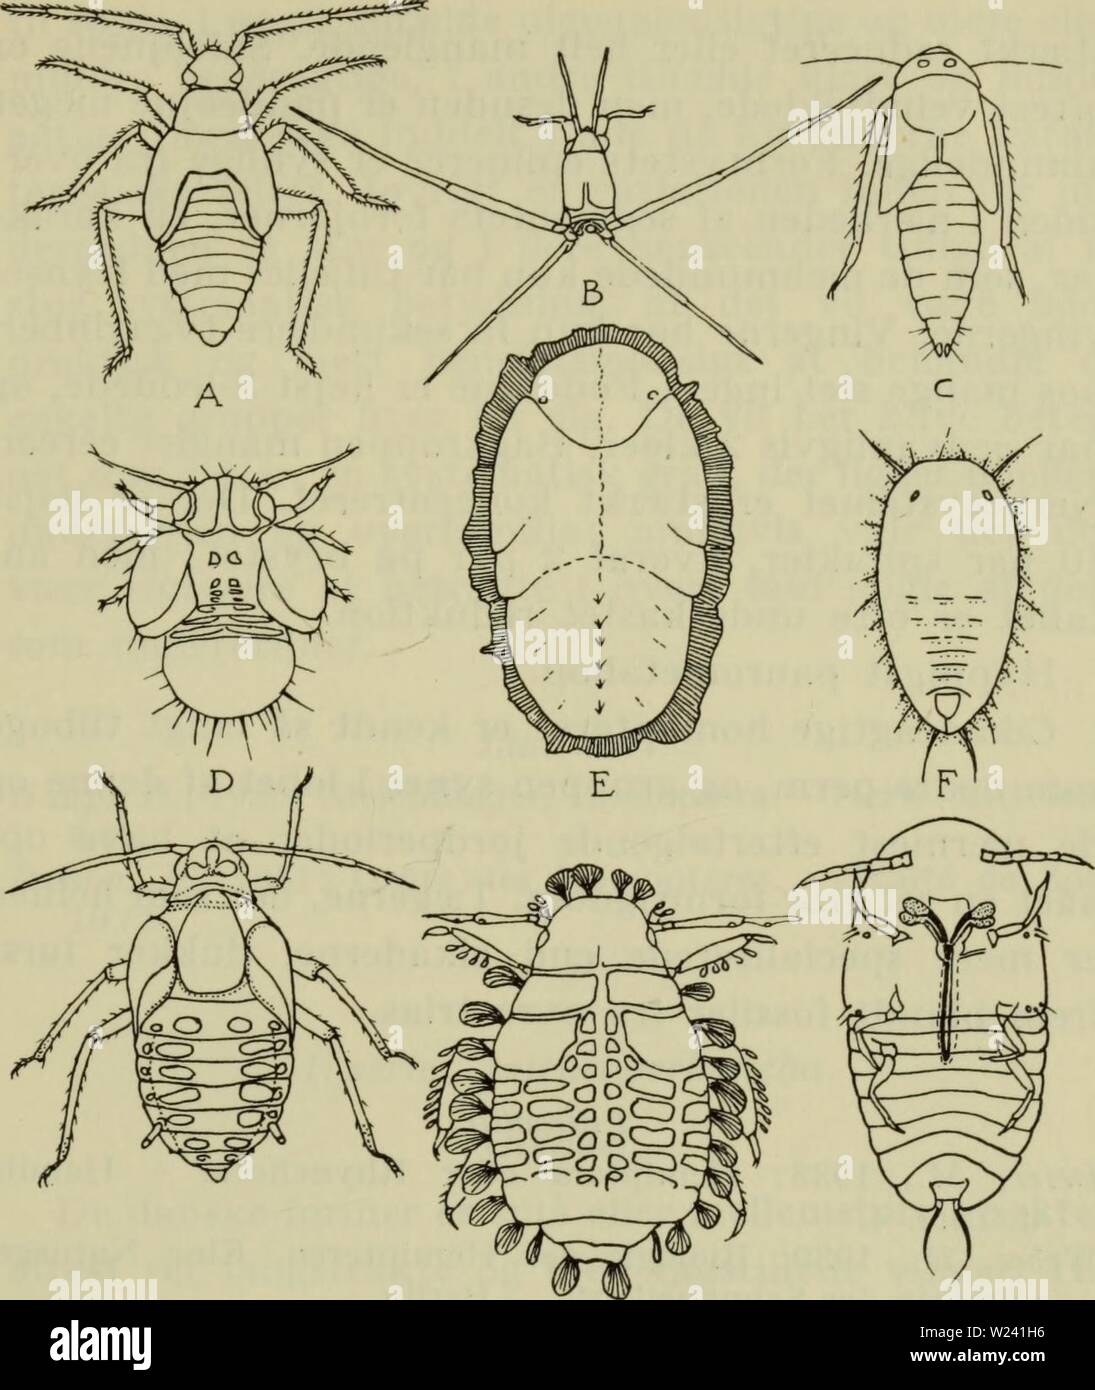 Archive image from page 196 of Danmarks fauna; illustrerede haandbøger over. Danmarks fauna; illustrerede haandbøger over den danske dyreverden..  danmarksfaunaill71dans Year: 1907  193    G H r Fig. 66. Larver af næbmunde. A tæge (Plesiocoris rugicollis); B Damtæge (Gerris najas); C cikade (Gicadula sexnotata); D blad- loppe (Psylla pyricola); E bladloppe (Trioza viridula); F mellus (Trialeurodes vaporariorum); G vingebærende bladlus (Aphis fabae); H bladlus (Periphyllus testudinatus); I skjoldlus (Goccus hesperi- dum). A-H set fra oven, I fra undersiden. (Her omtegnet fra for- skellige kilde Stock Photo